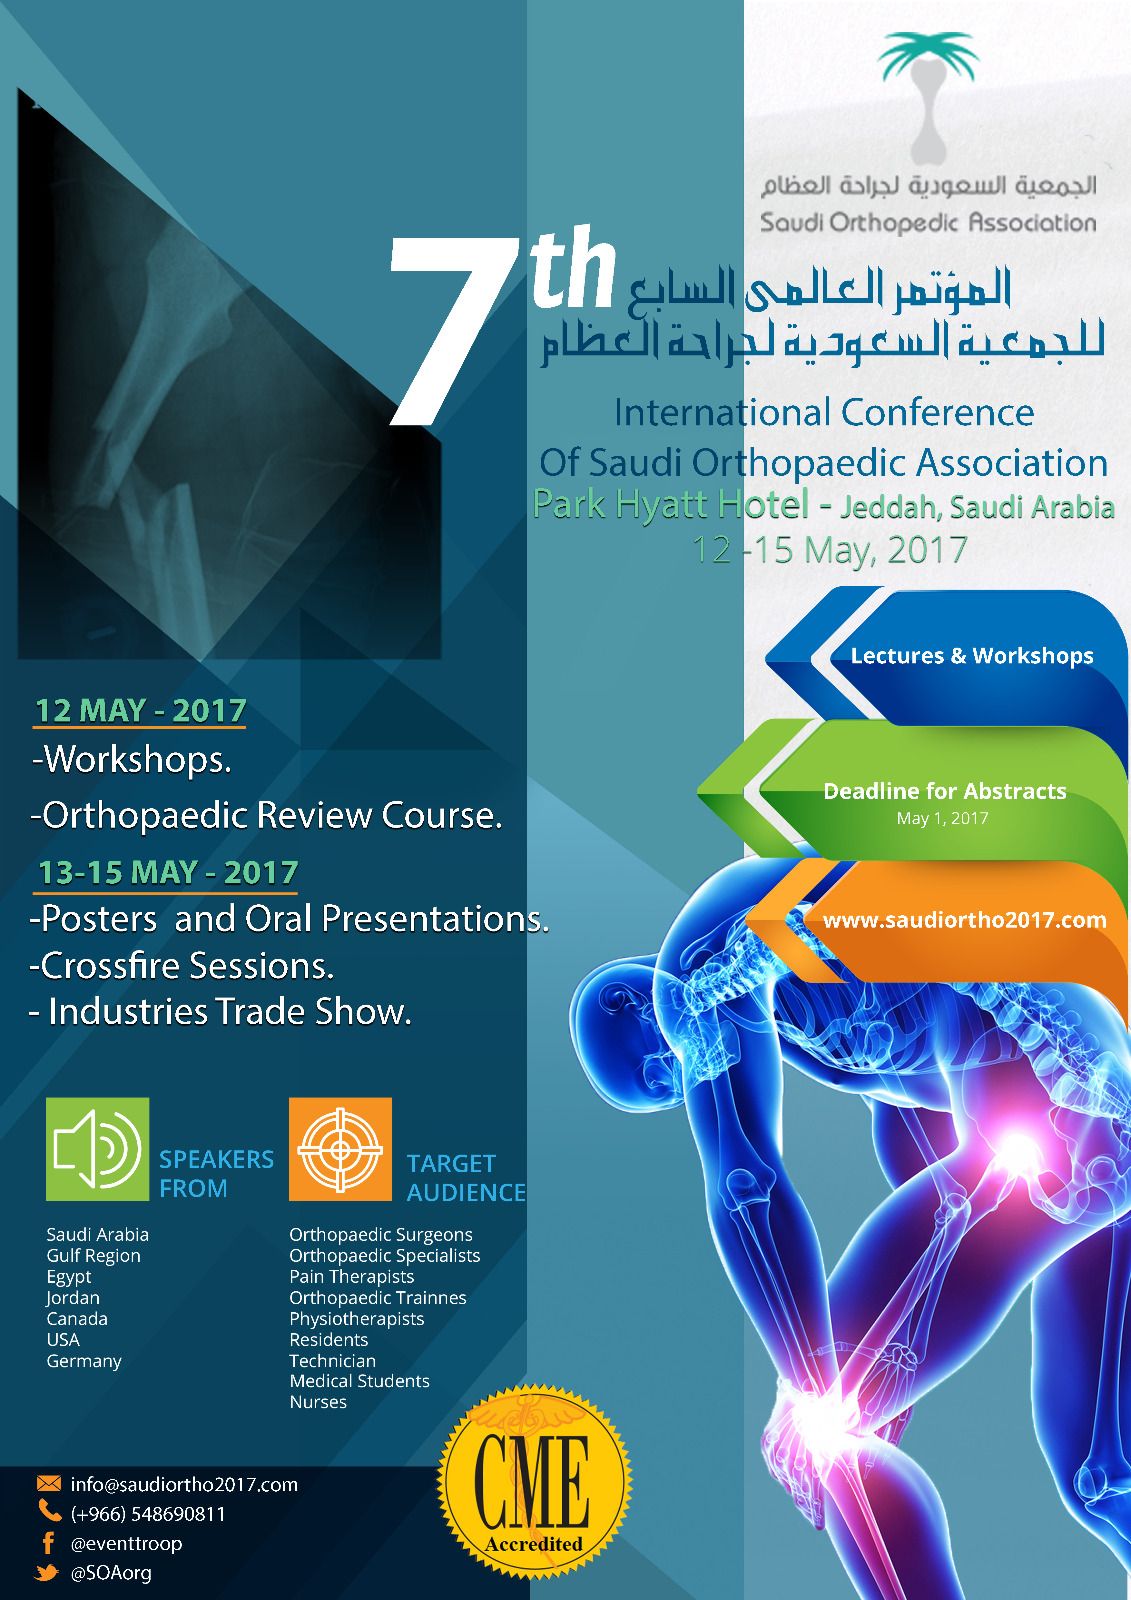 7th International Conference of Saudi Orthopaedic Association